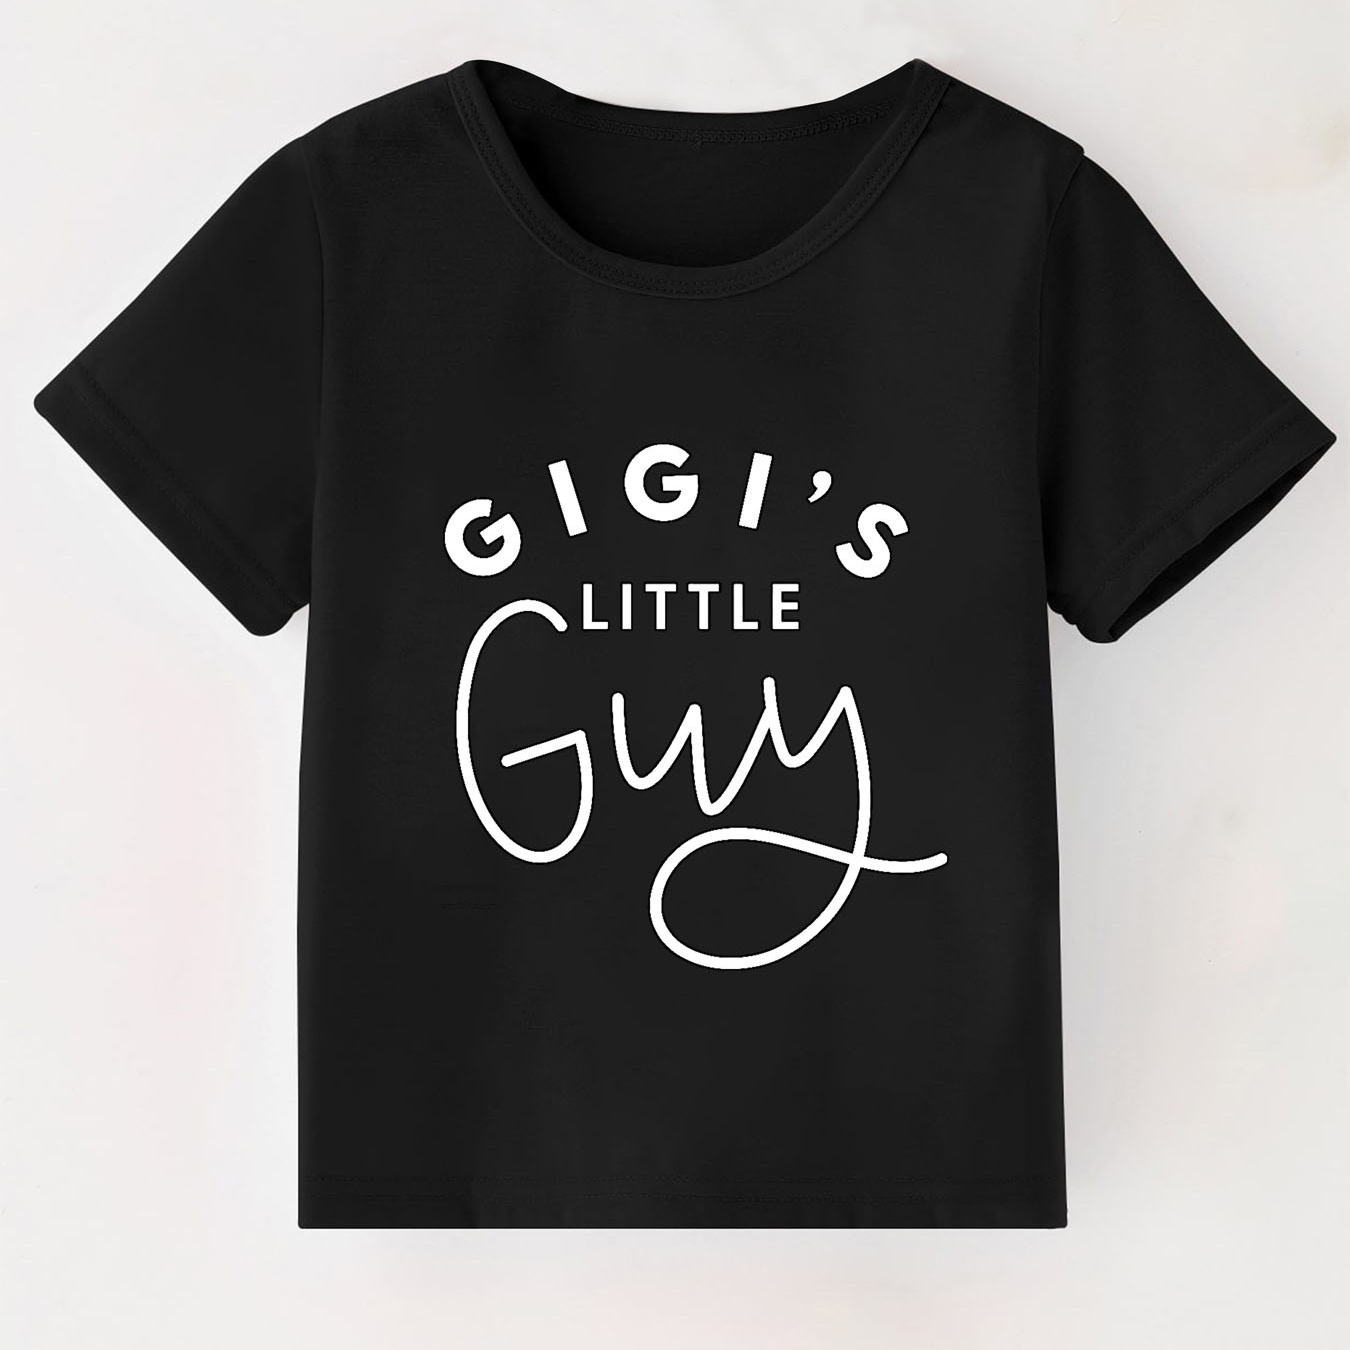 

Gigi's Little Guy Print Boy's Casual T-shirt, Comfortable Short Sleeve Top, Boys Summer Clothing